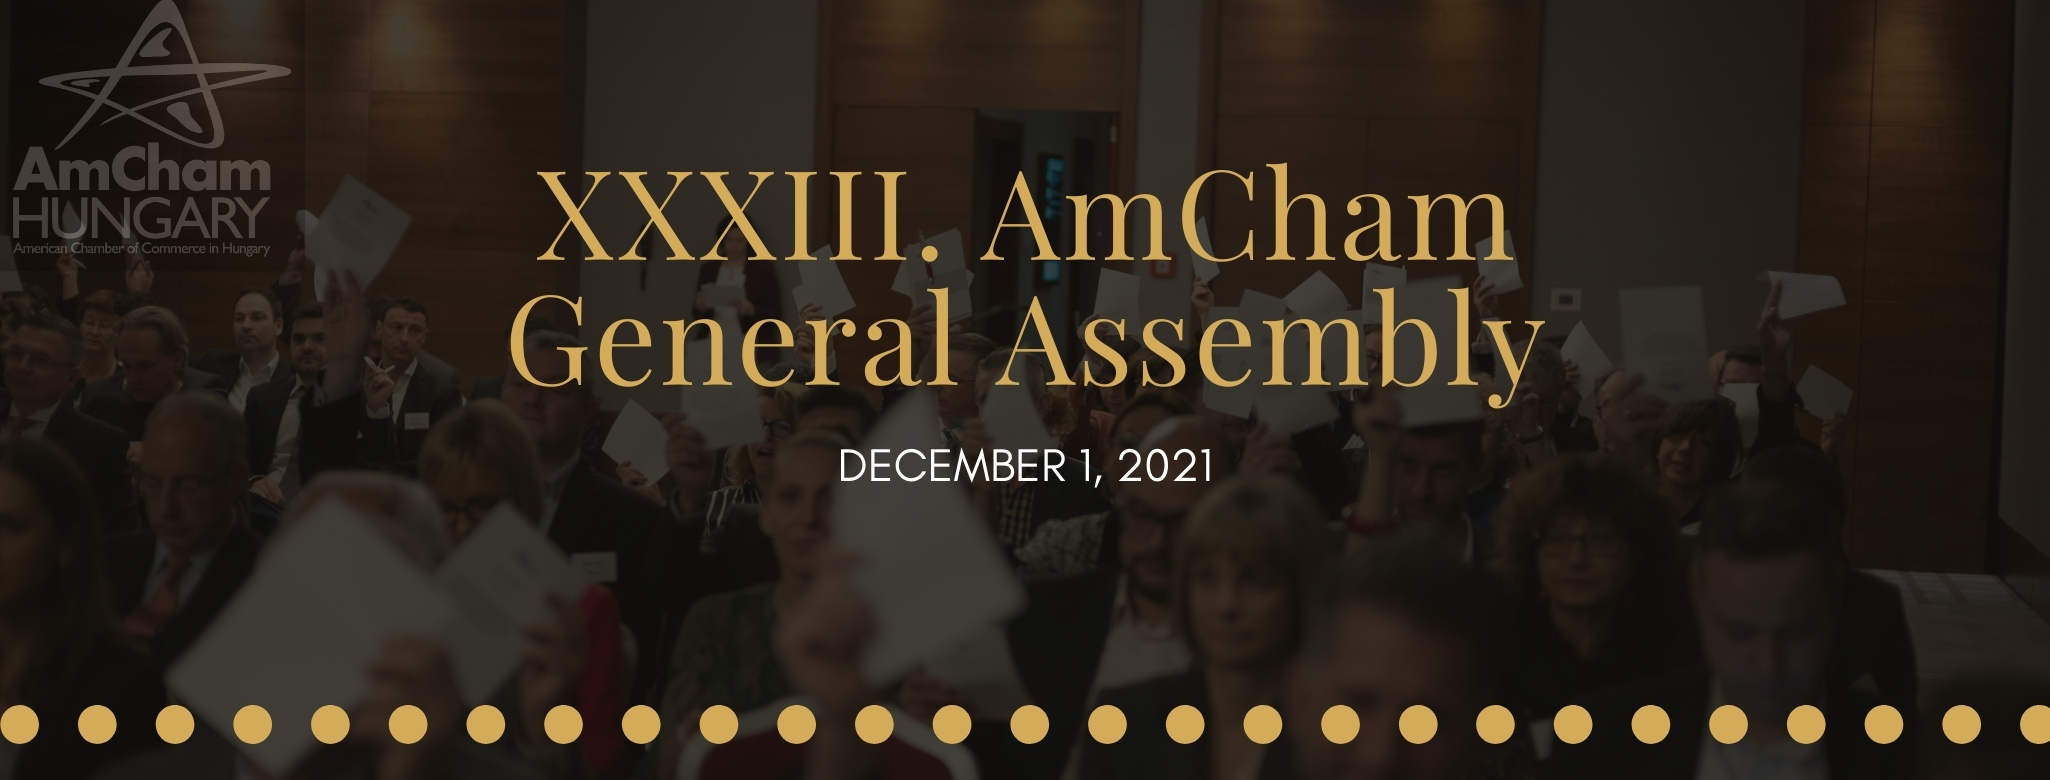 XXXIII. General Assembly